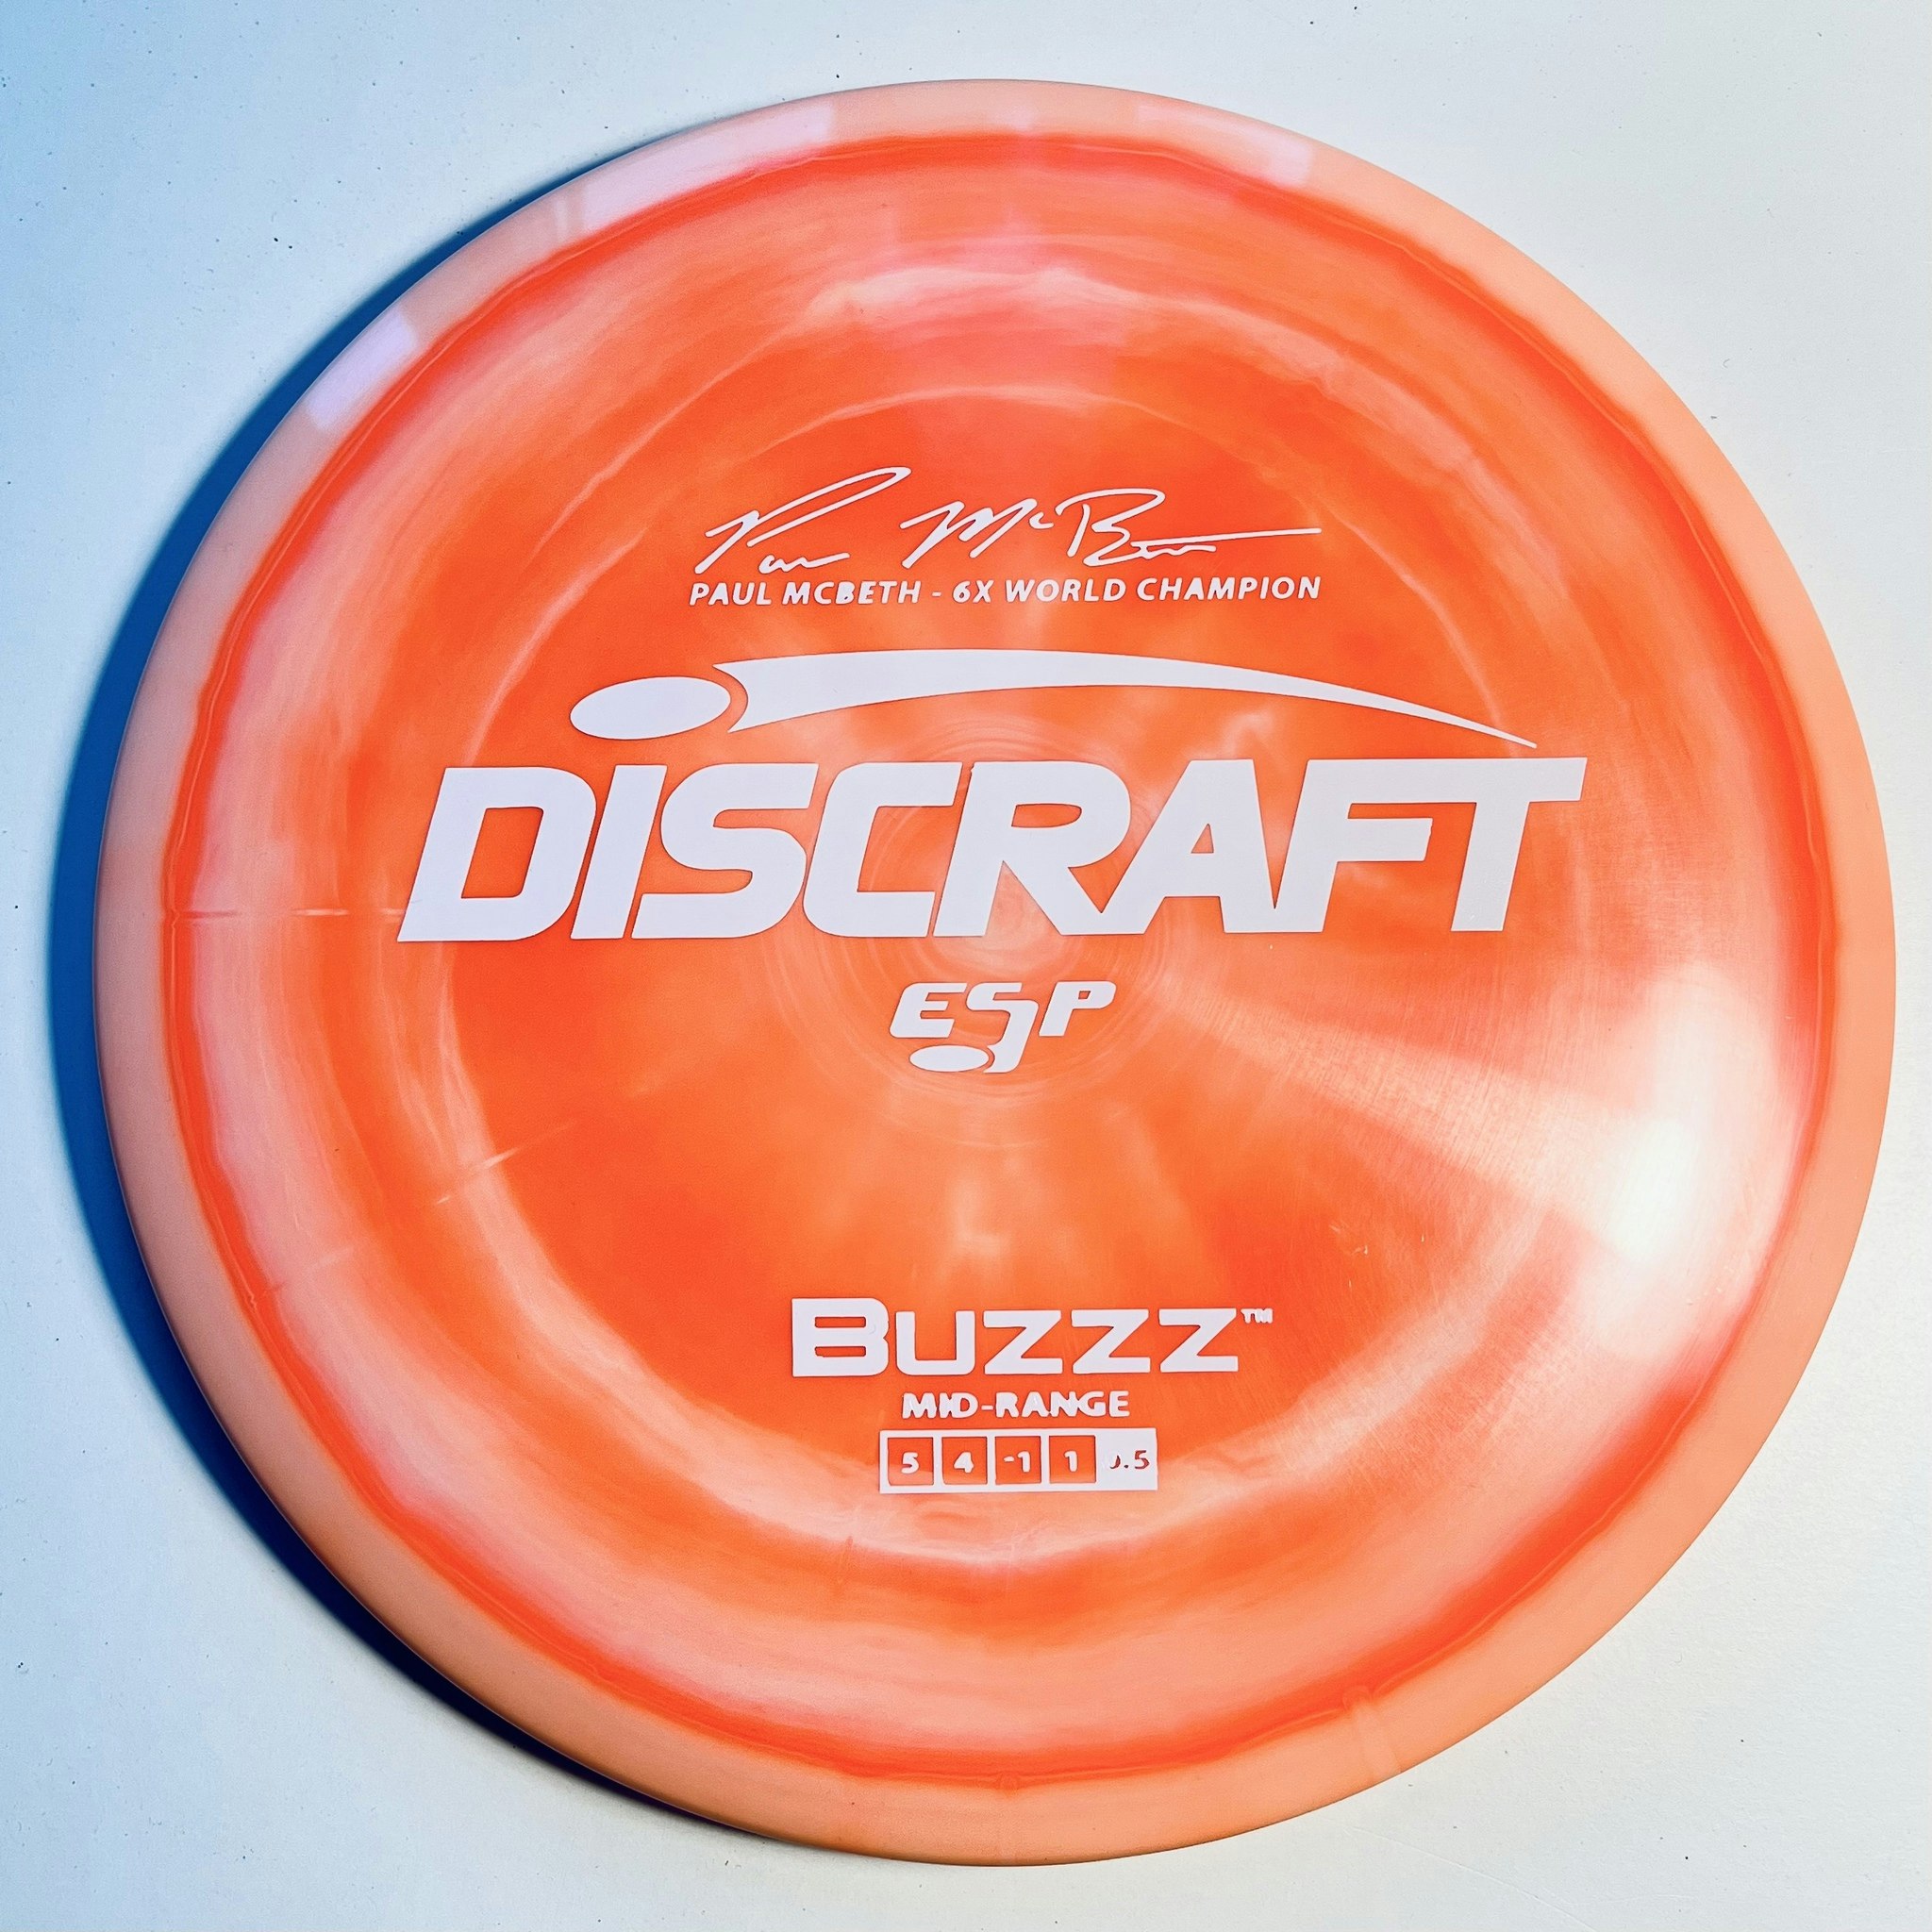 ESP Buzzz Paul McBeth - Discraft